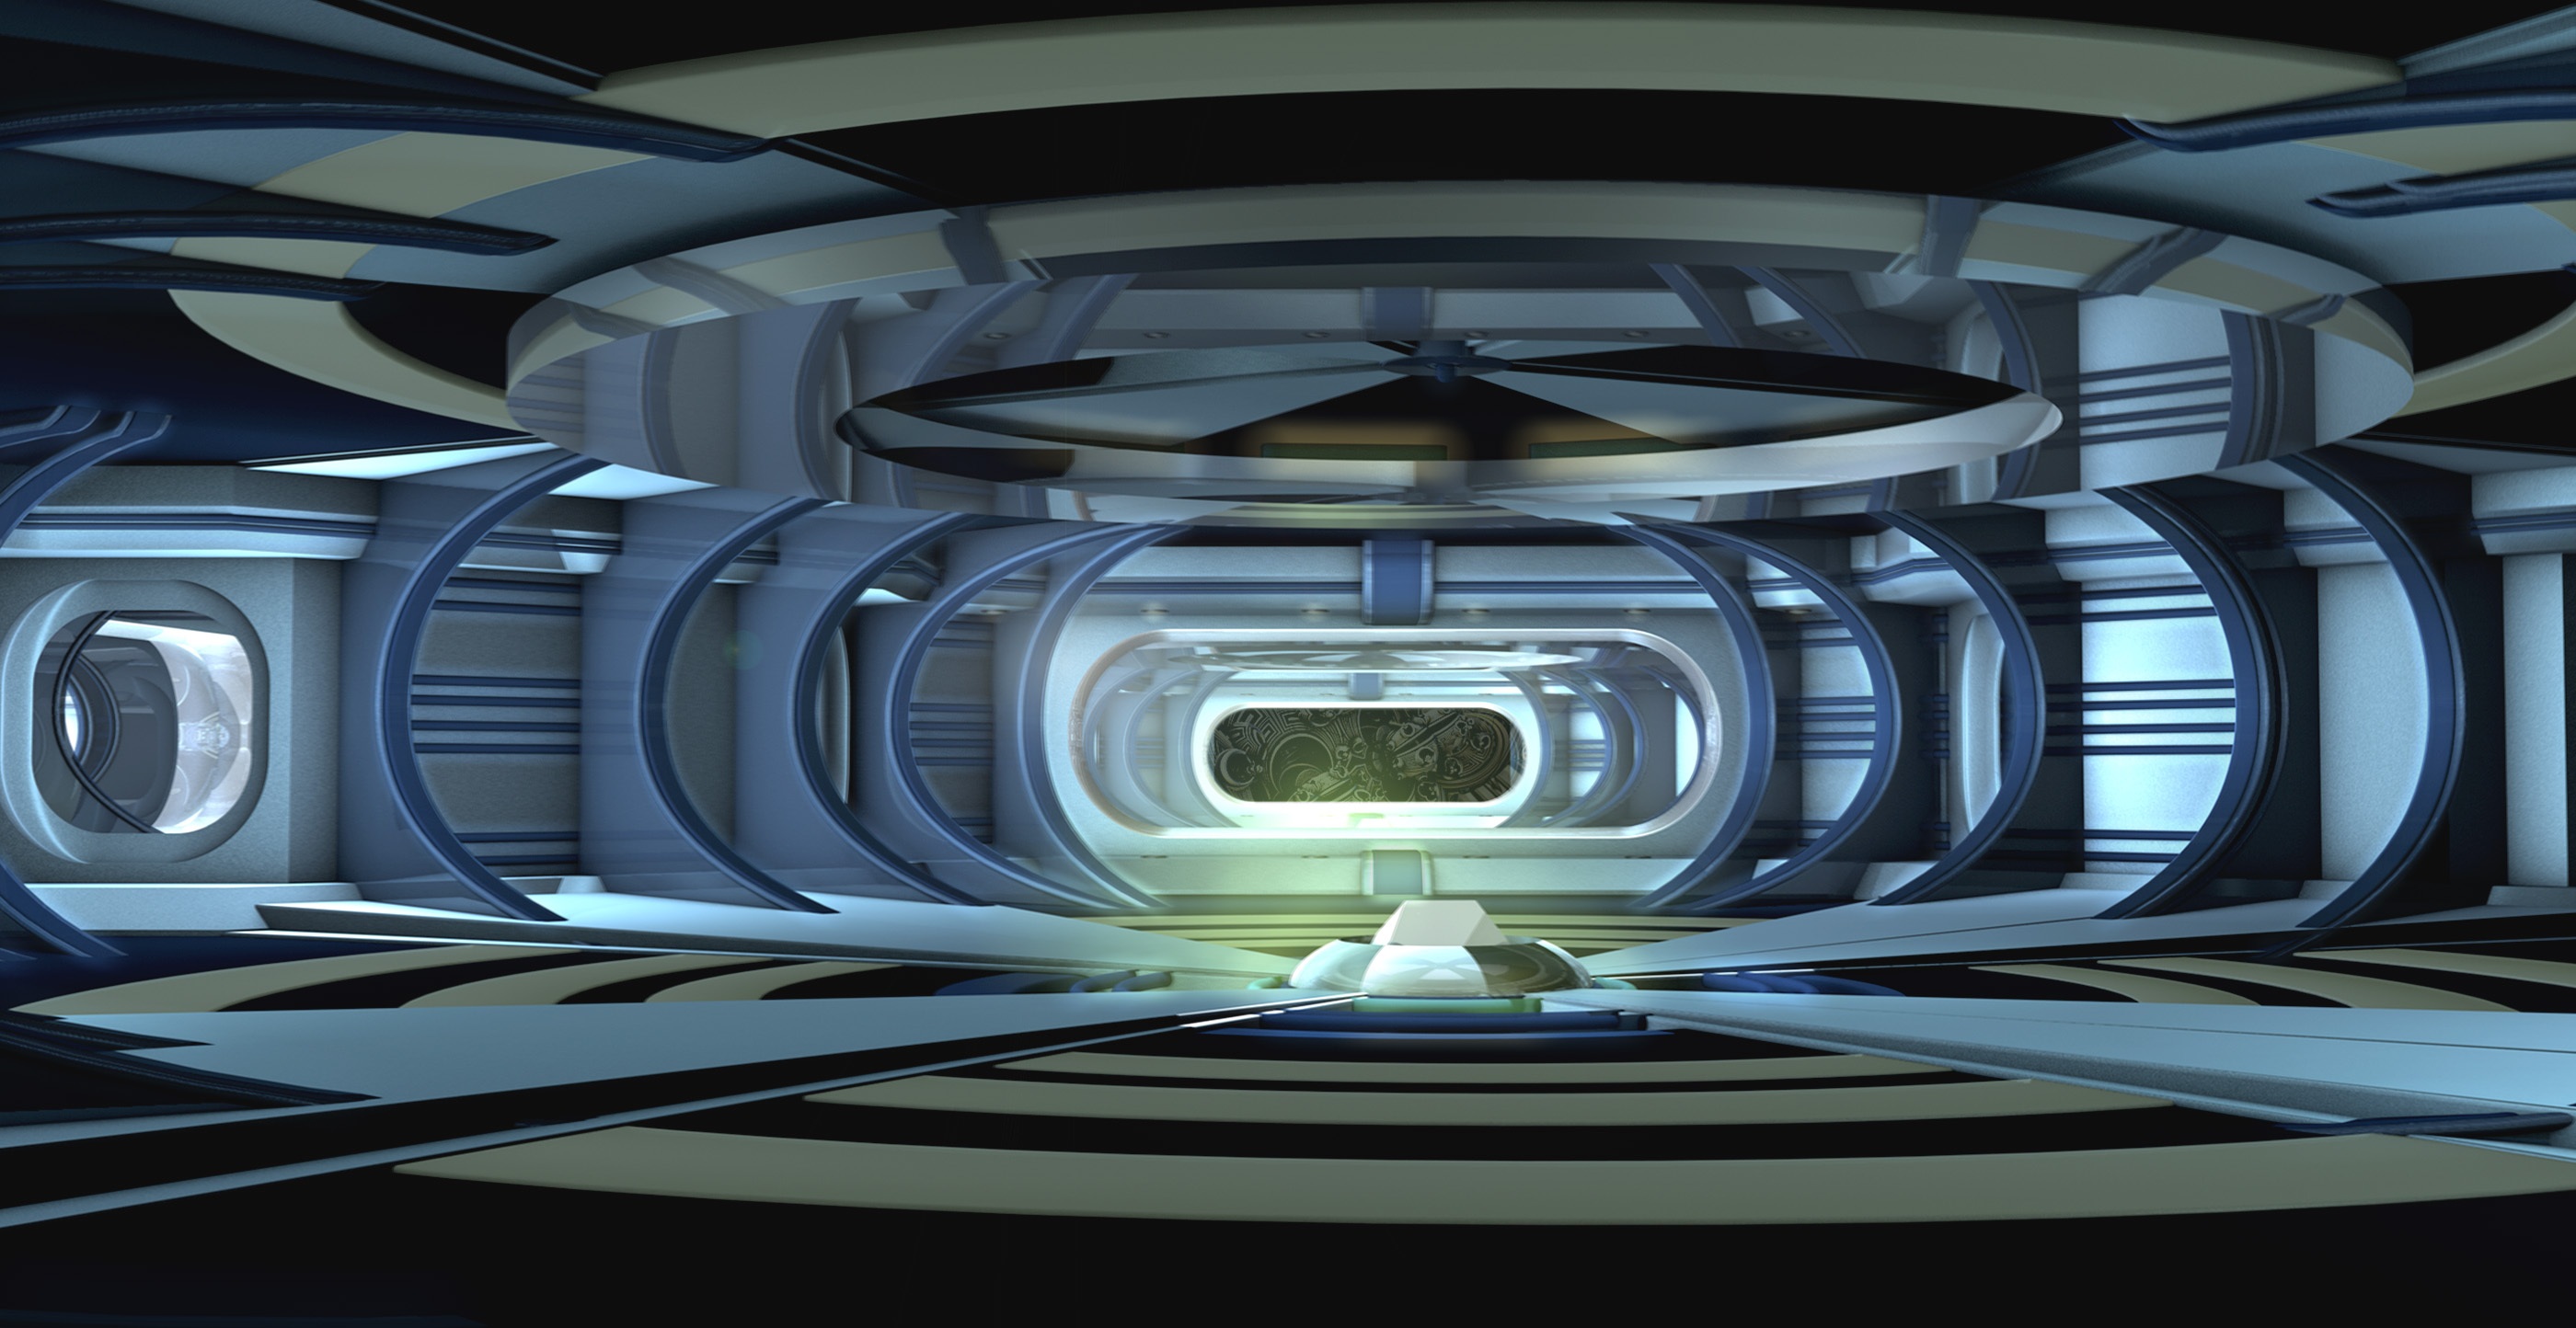 Page 24 | Spaceship Interior Background Images - Free Download on Freepik